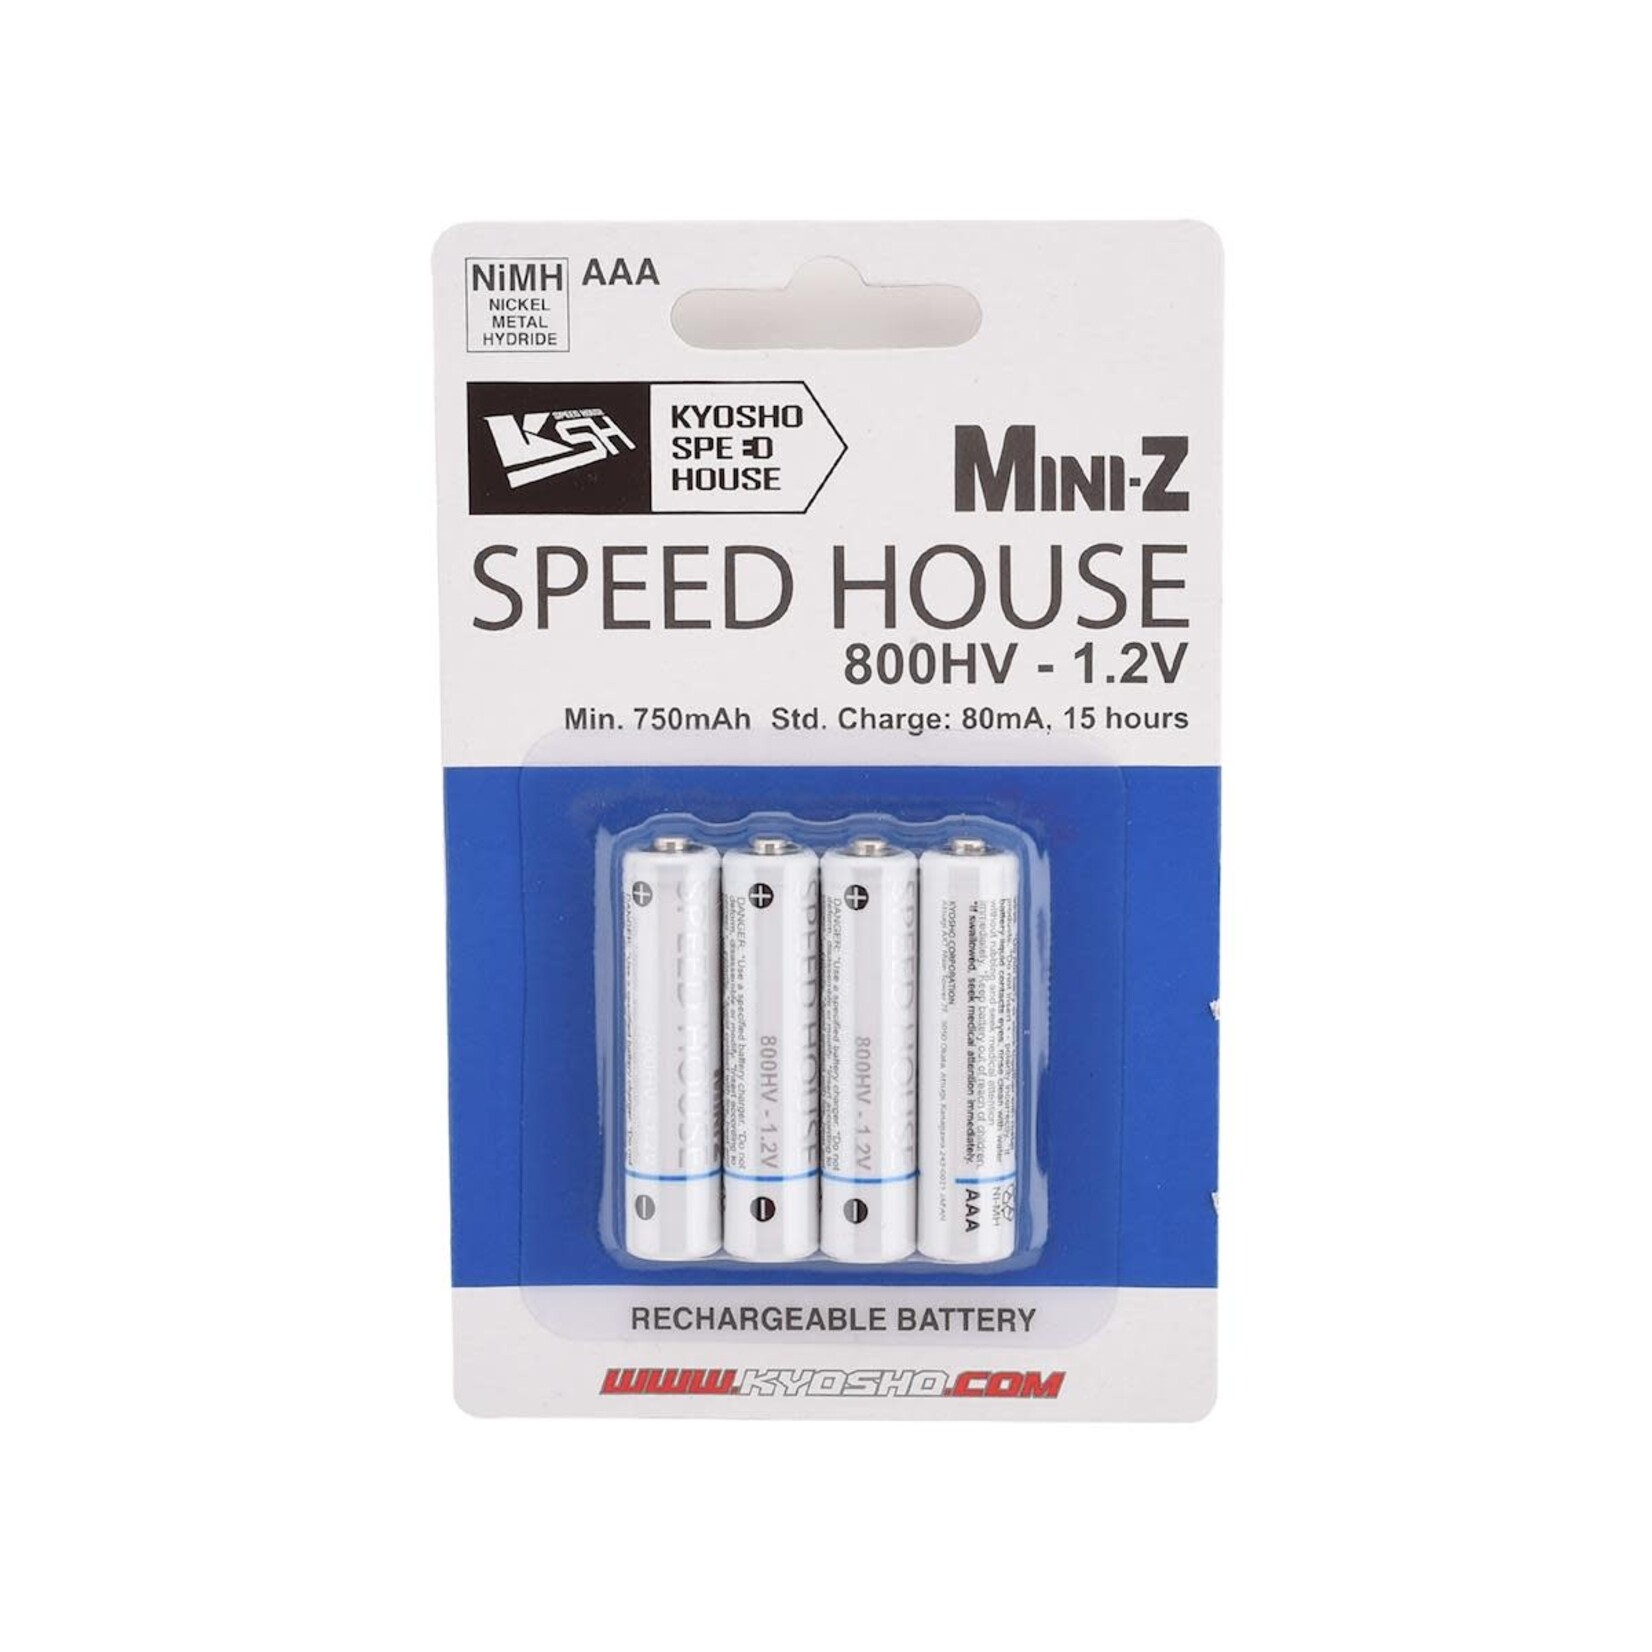 Kyosho Kyosho Speed House Mini-Z AAA NiMh Batteries (800HV) (4) #71998B